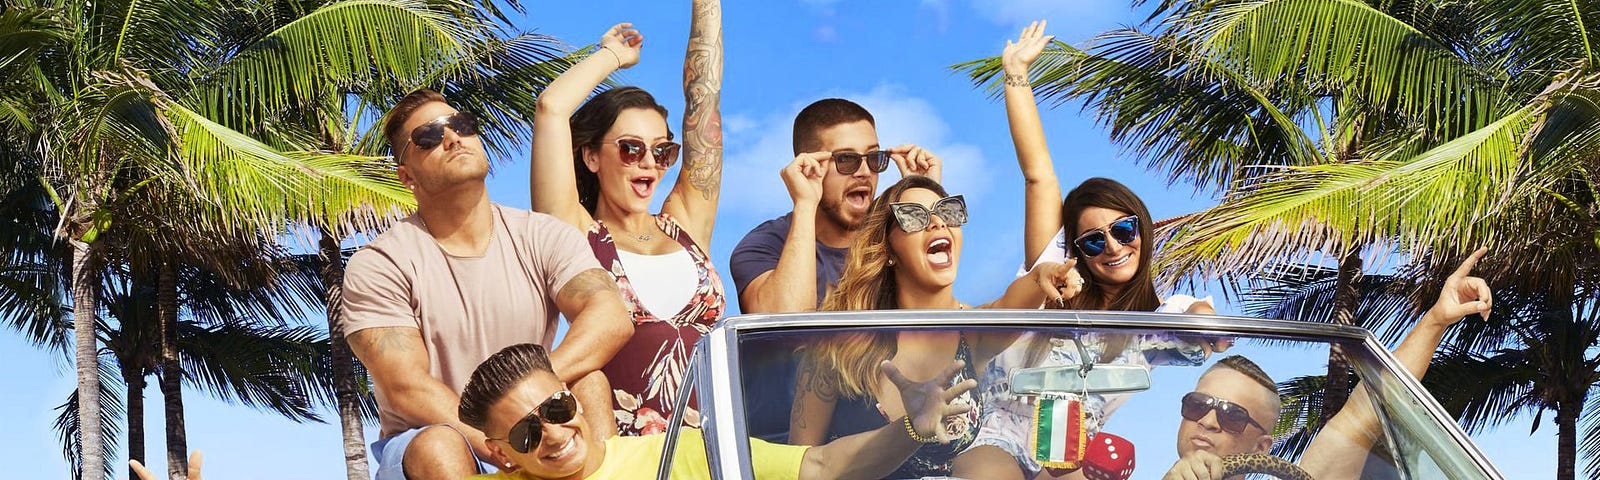 jersey shore family vacation season 3 online free